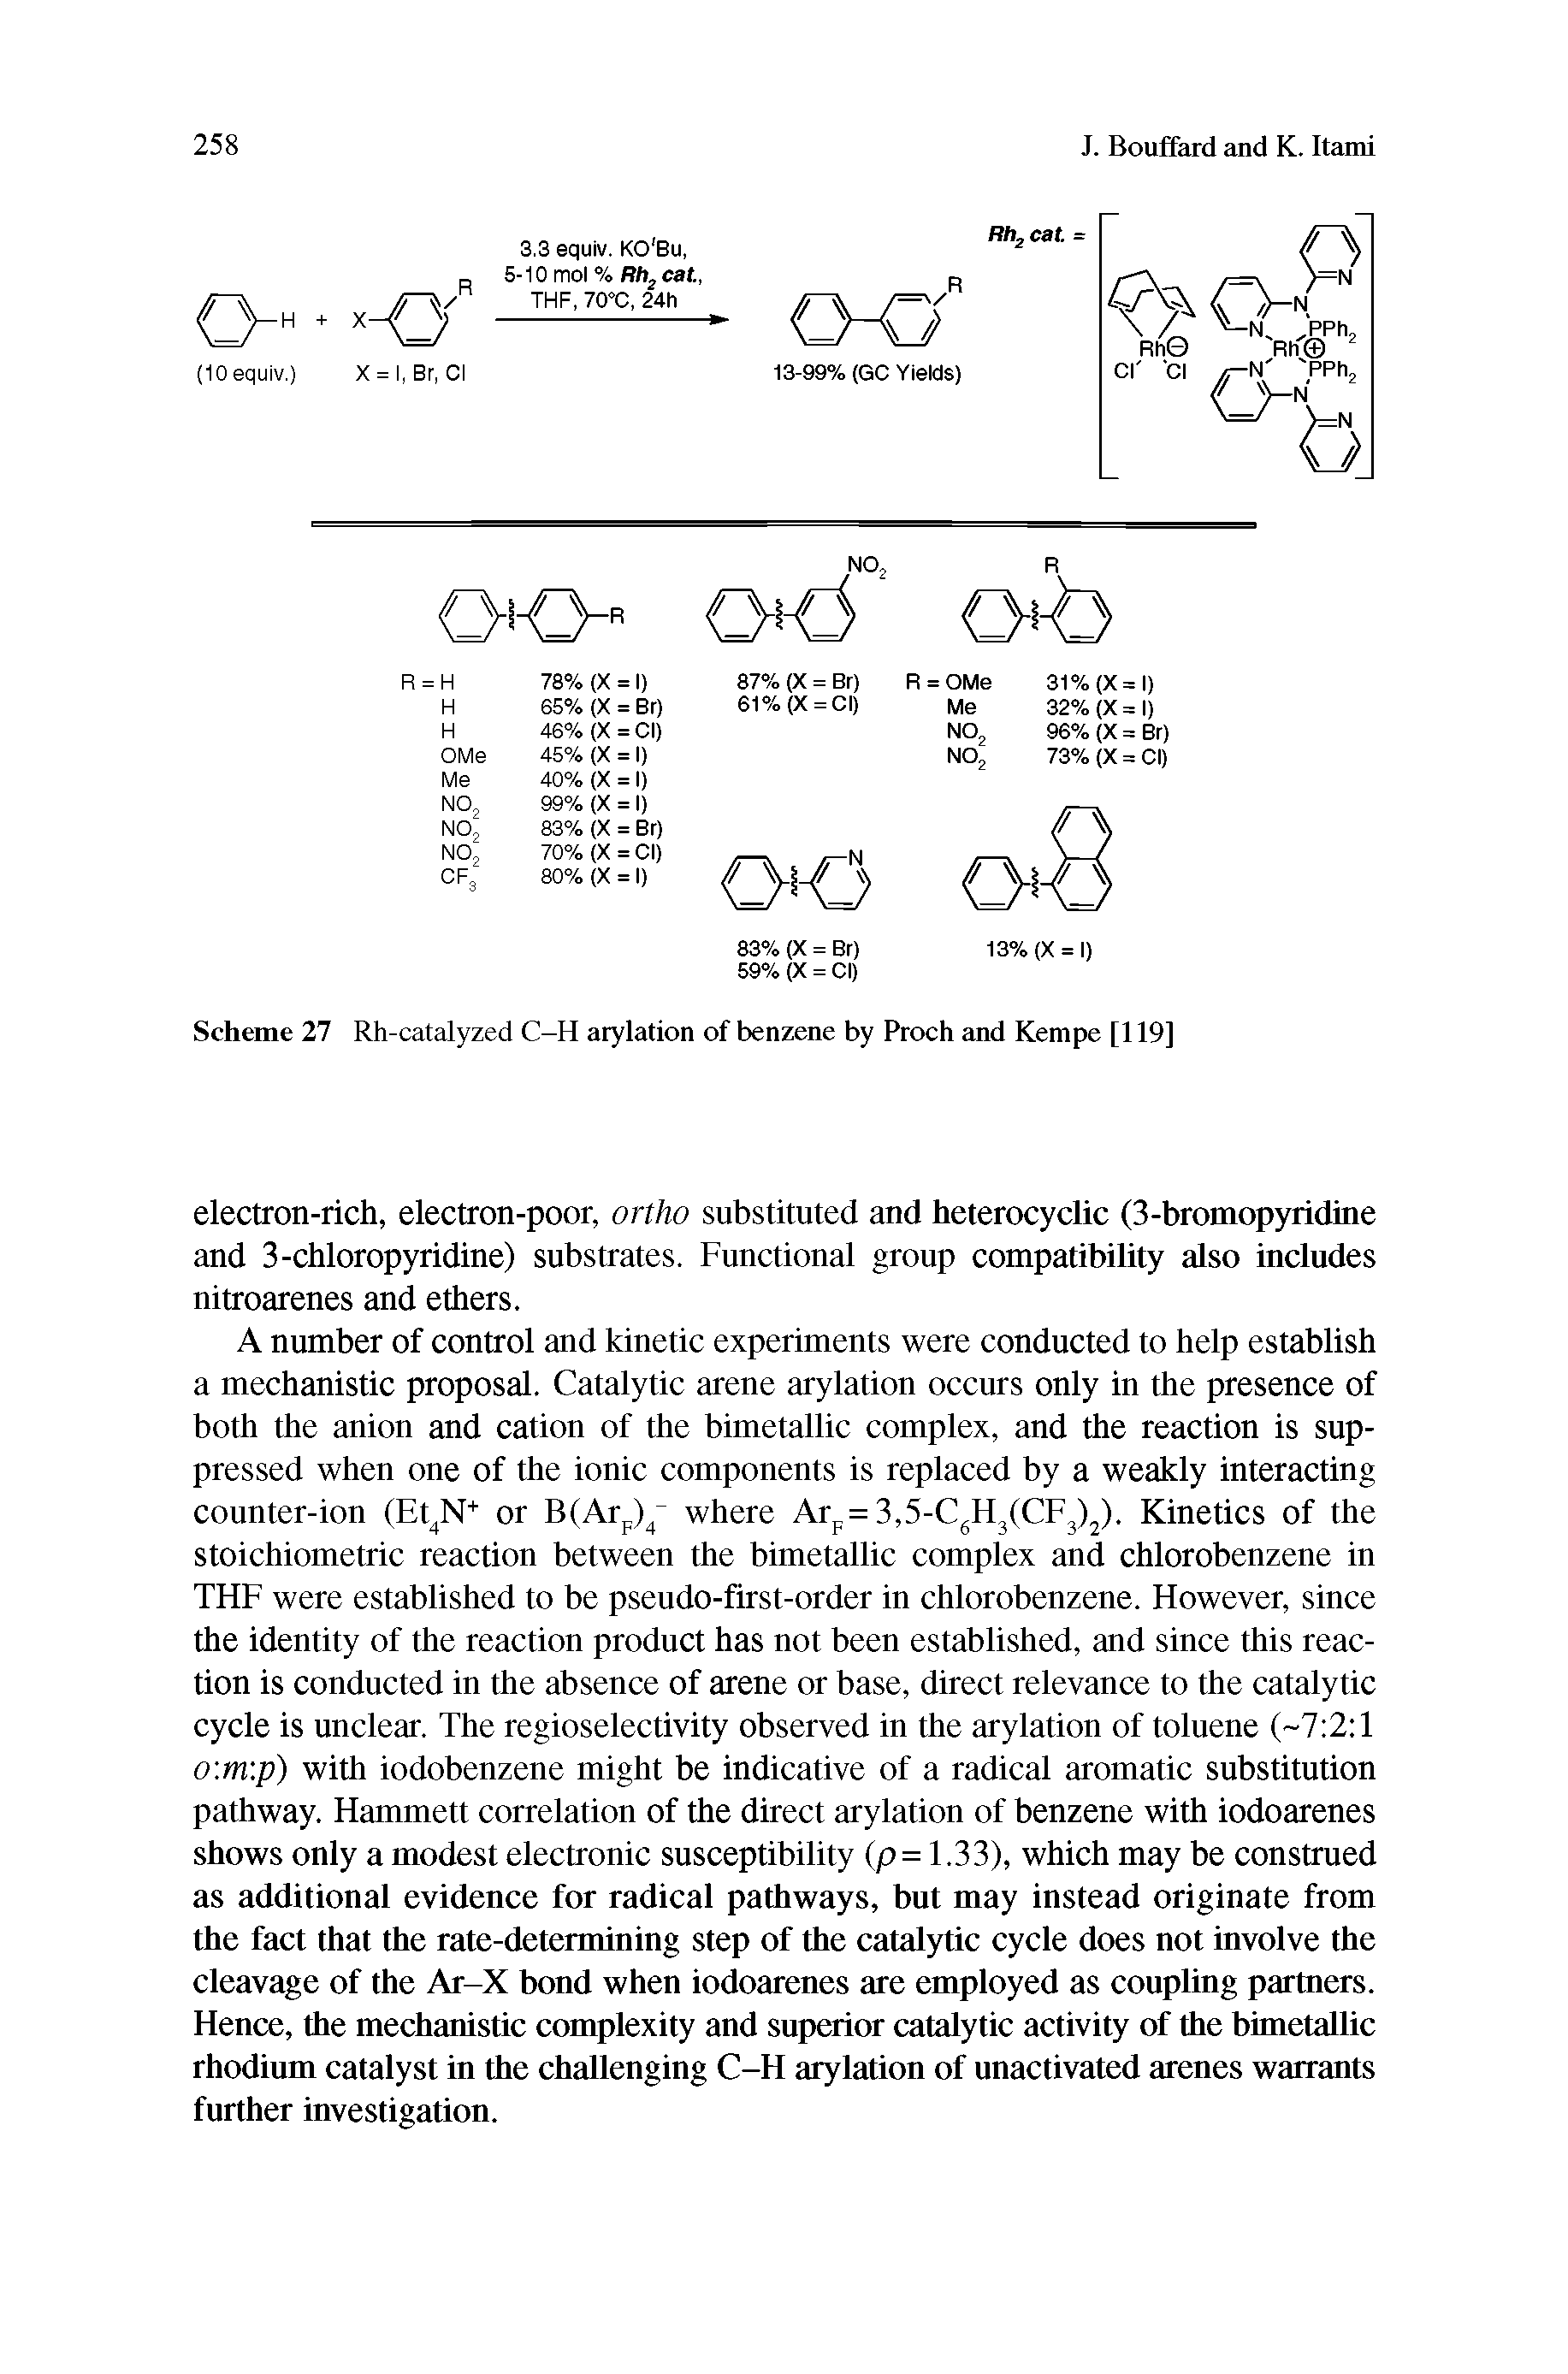 Scheme 27 Rh-catalyzed C-H arylation of benzene by Proch and Kempe [119]...